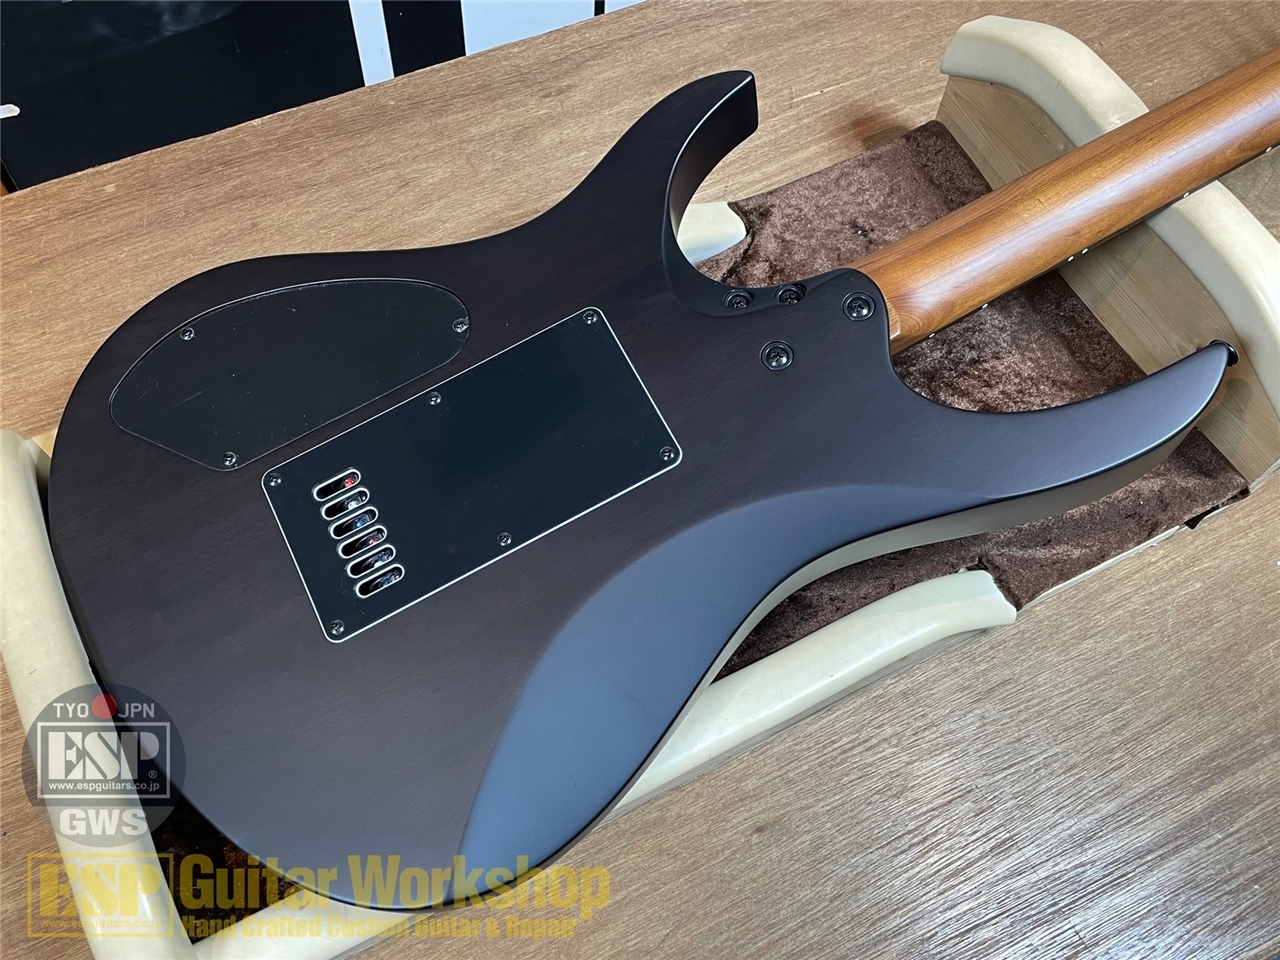 【即納可能】Balaguer Guitars Diablo Standard with Evertune Bridge, Satin Trans Black GWS